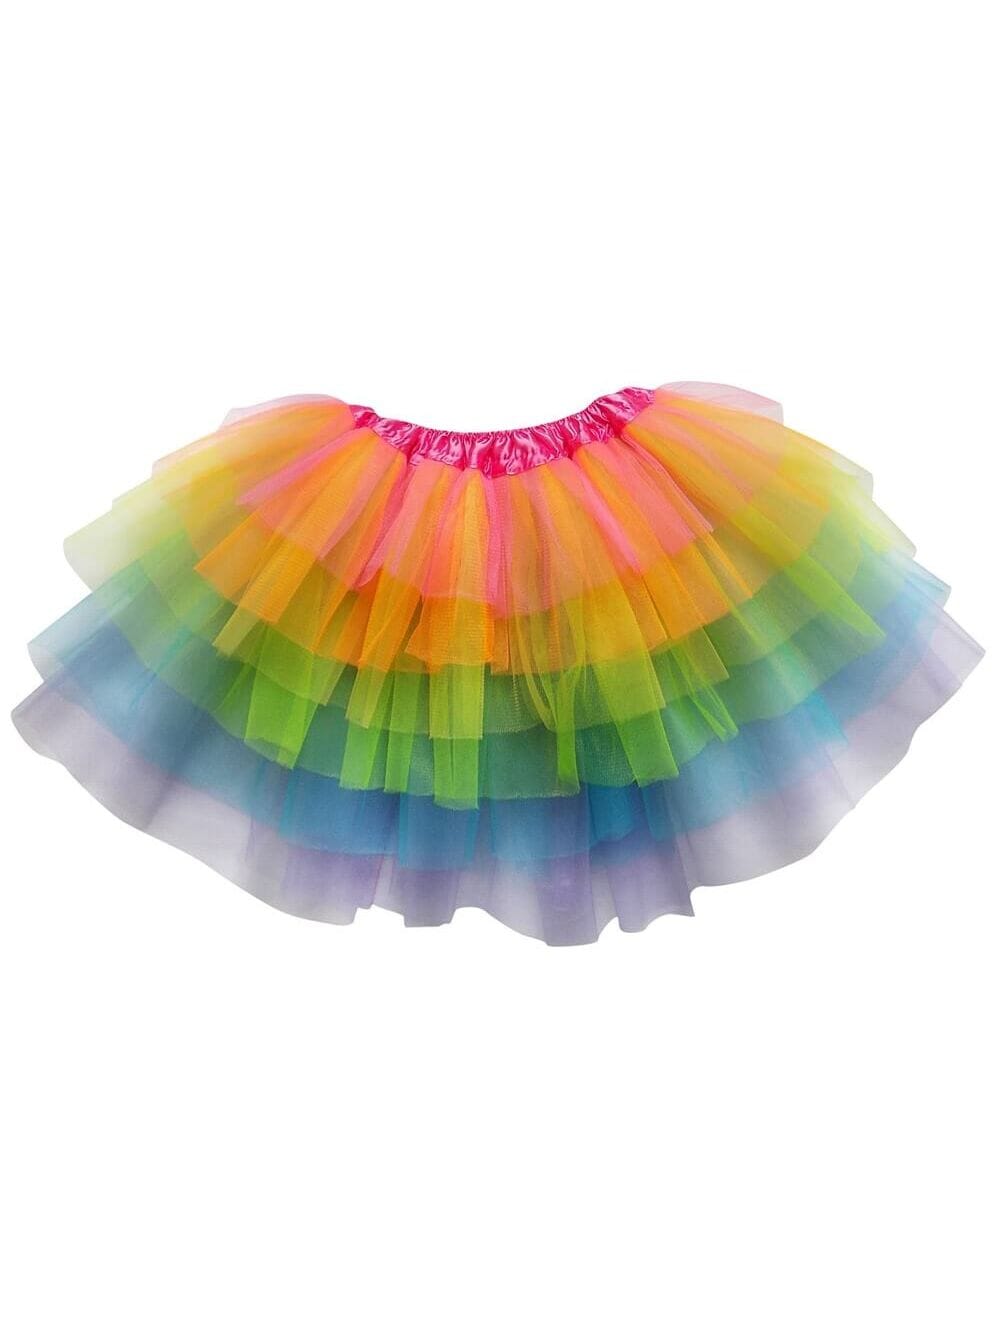 Neon Rainbow 6 Layer Tutu Skirt Costume for Girls, Women, Plus - Sydney So Sweet